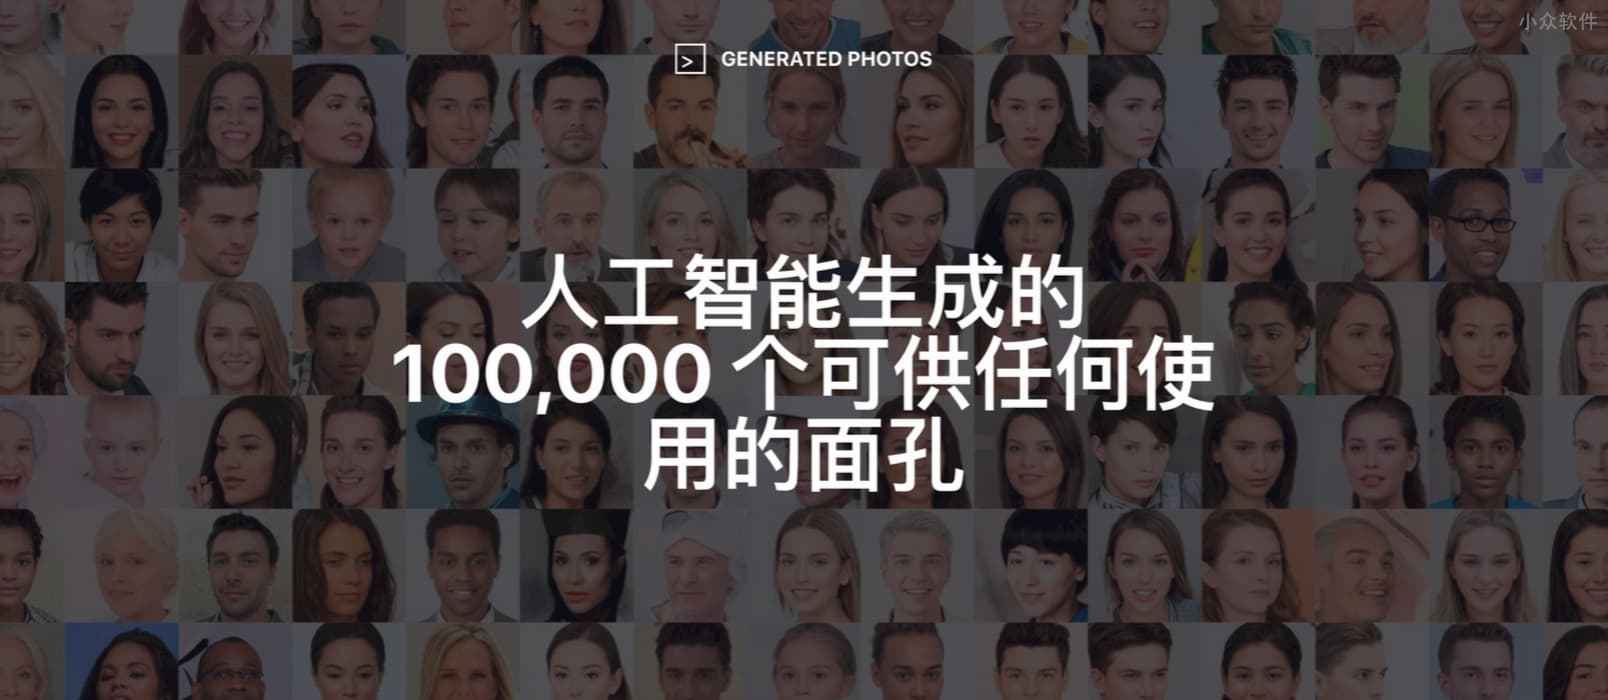 100,000 Faces – 10万张不要肖像权的人脸照片，随便用